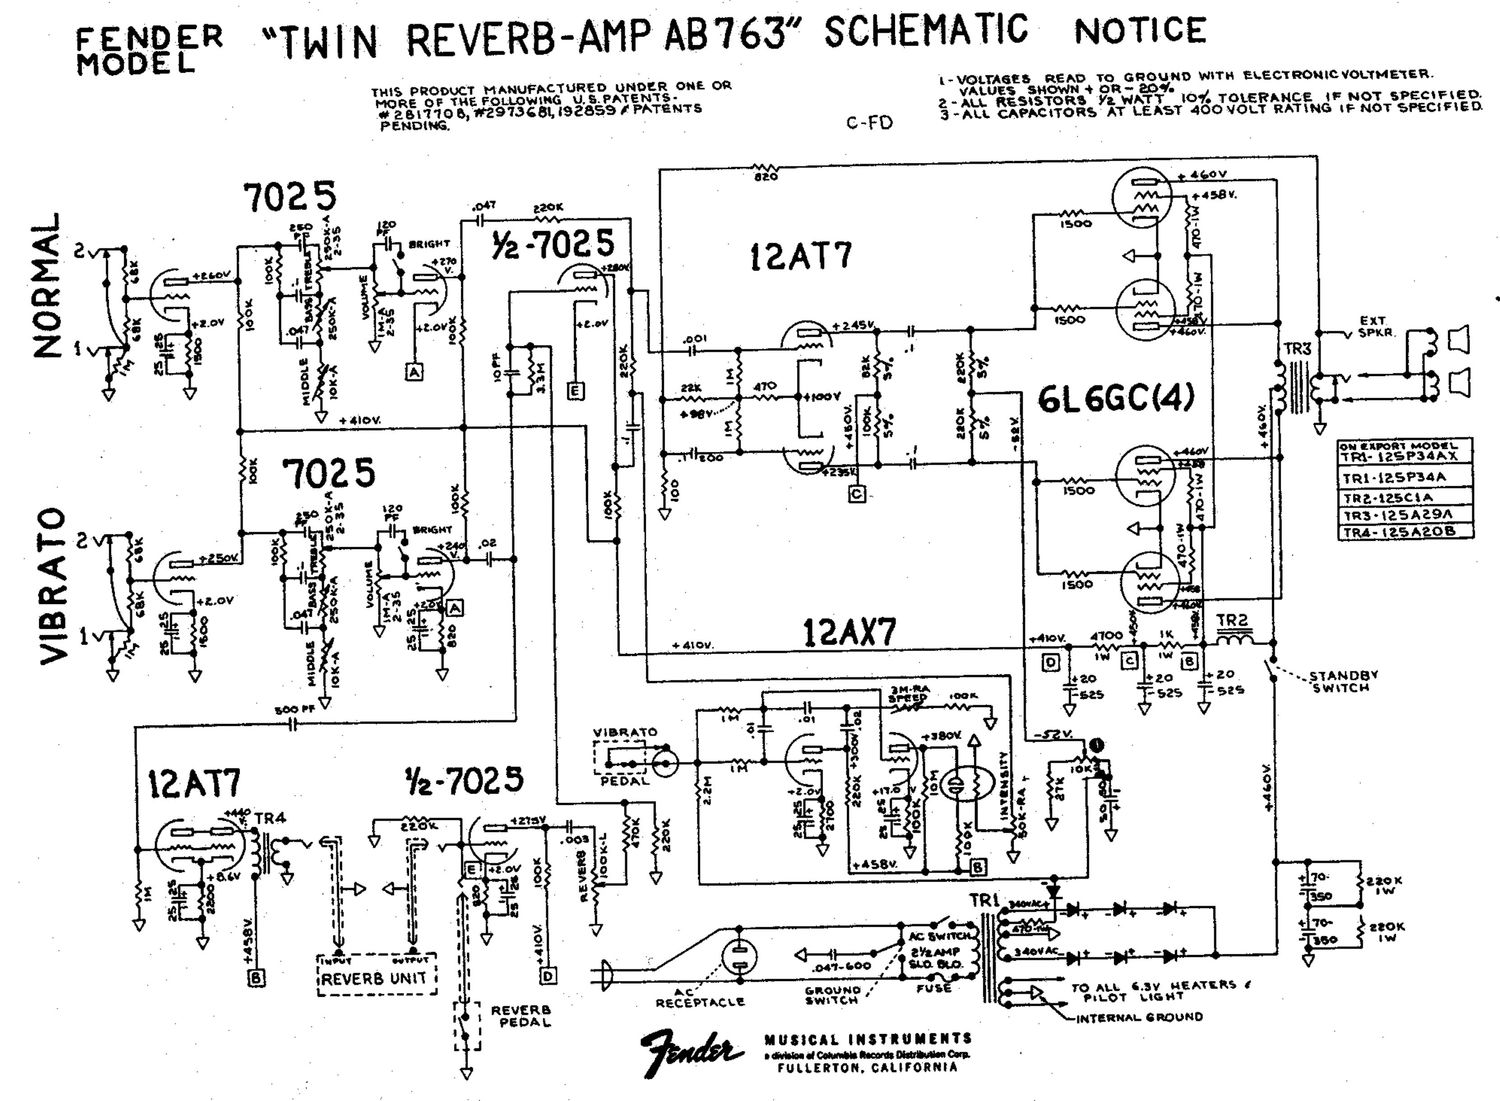 fender twin reverb ab763 schematic